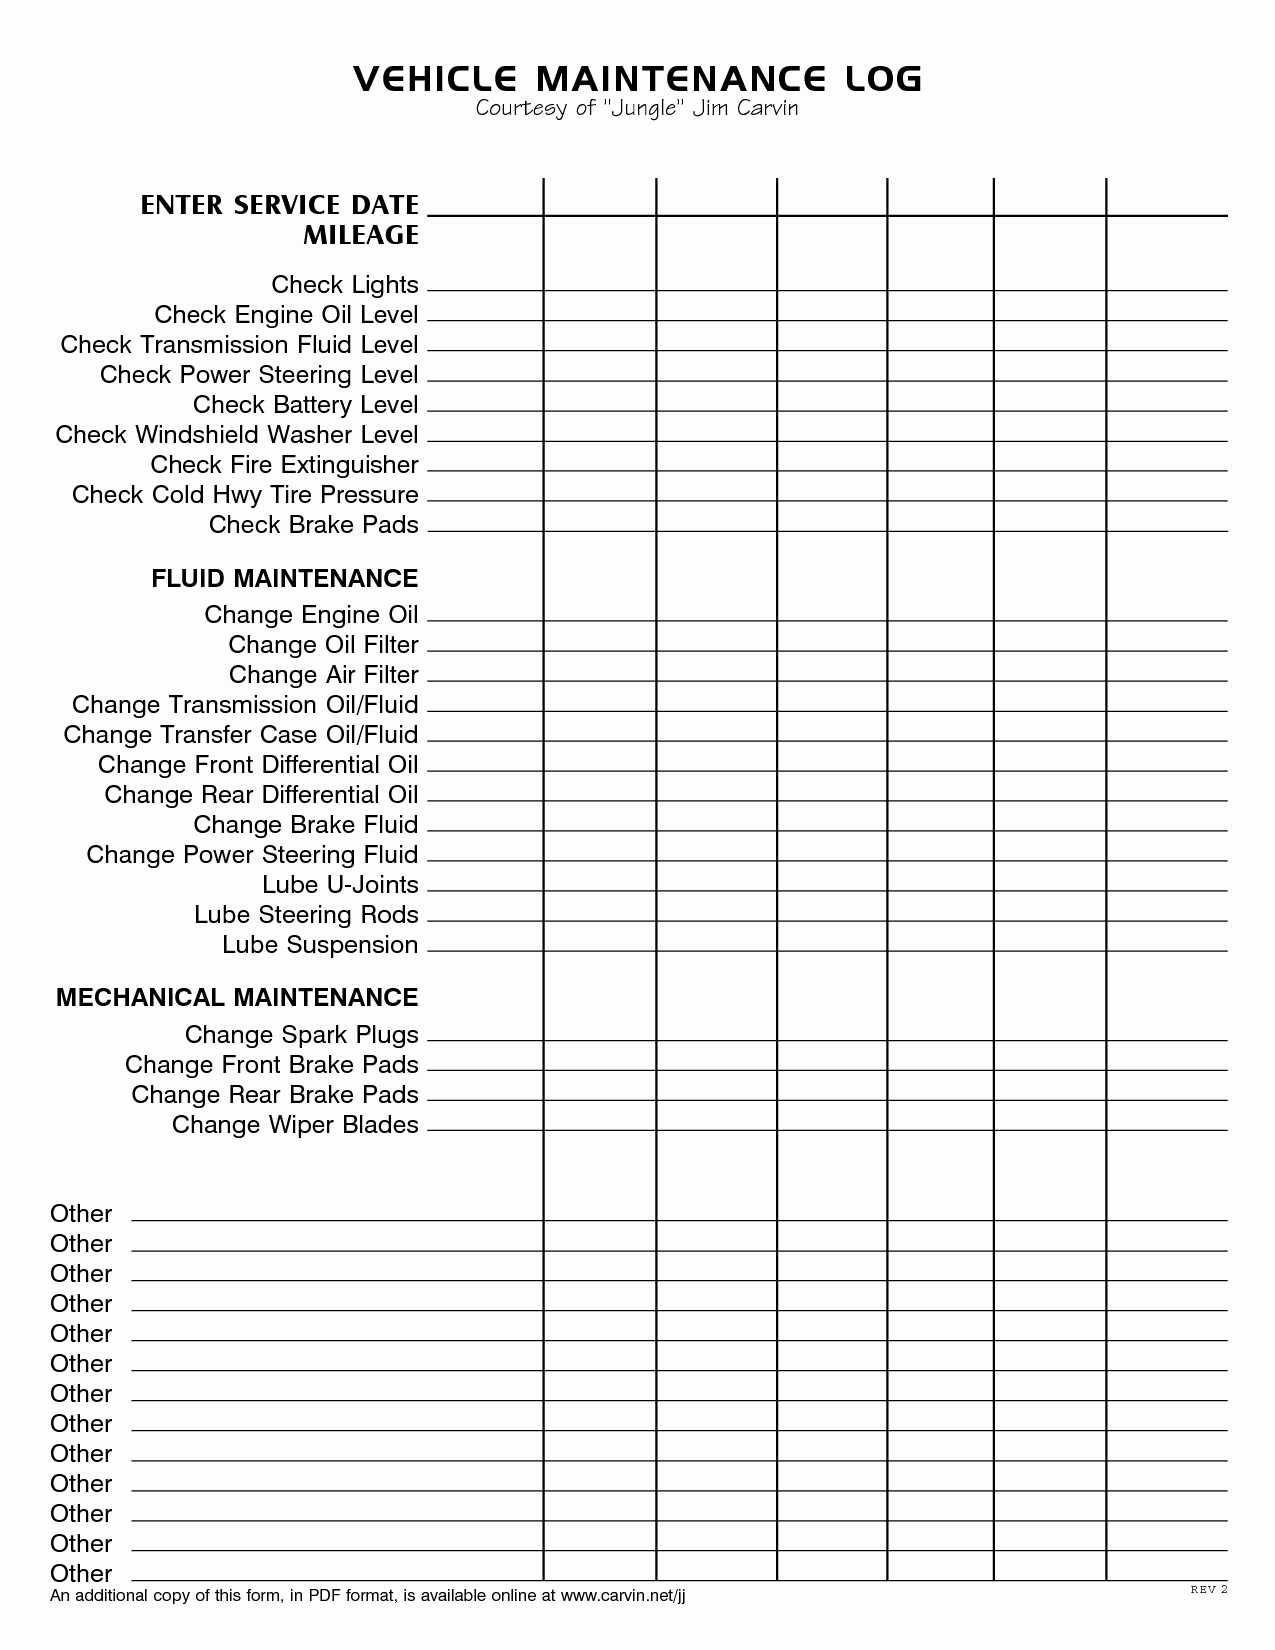 Vehicle Maintenance Schedule Template Excel Unique Vehicle Maintenance Log Book Template